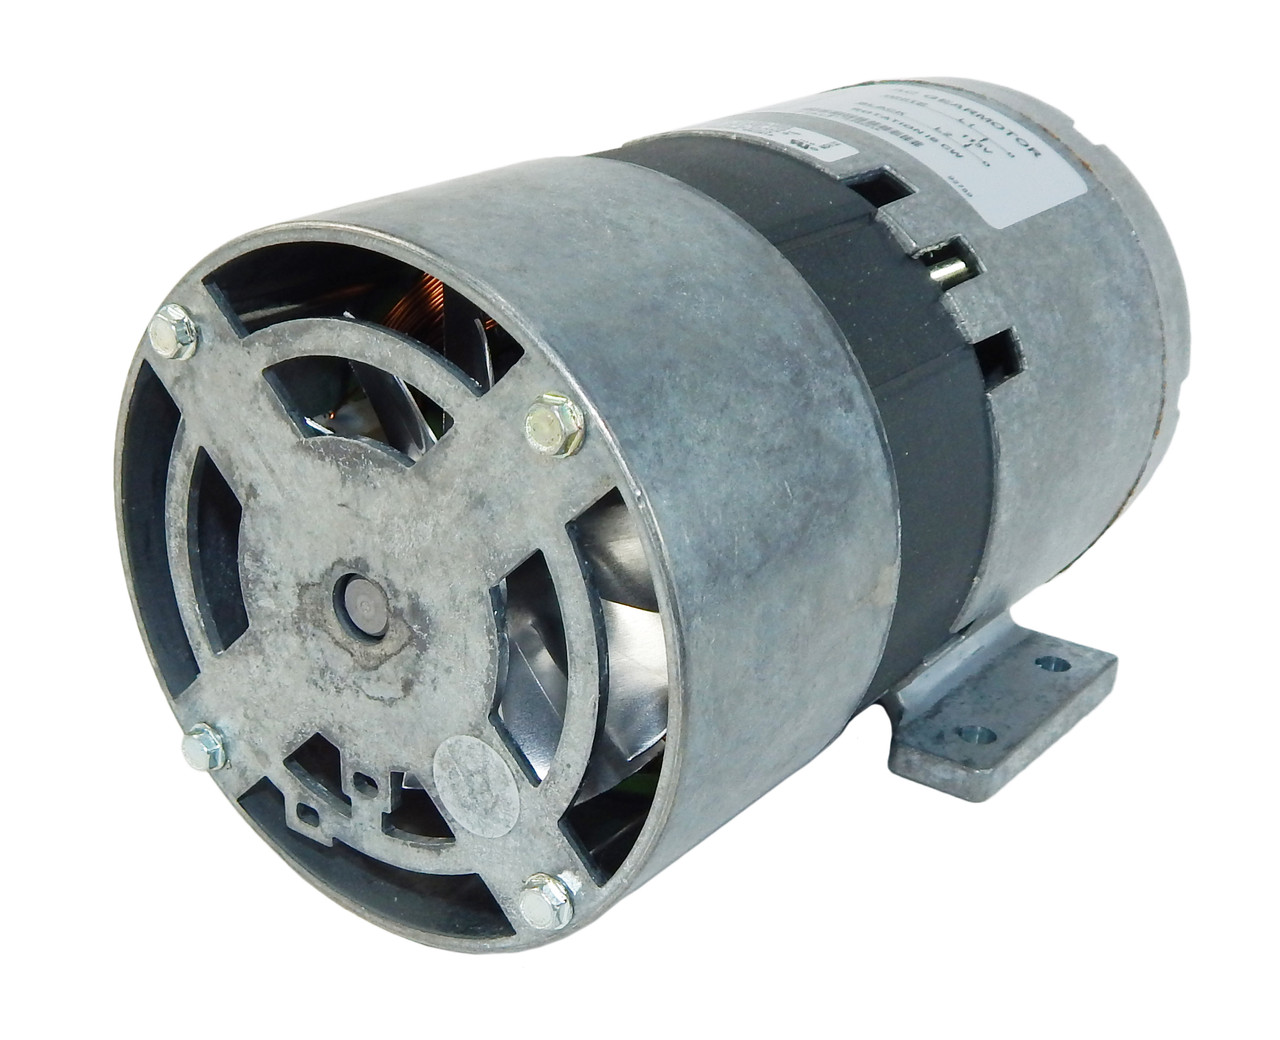 Gear motor AC 230V 5rpm CW, ref. 013330, Mootio Components